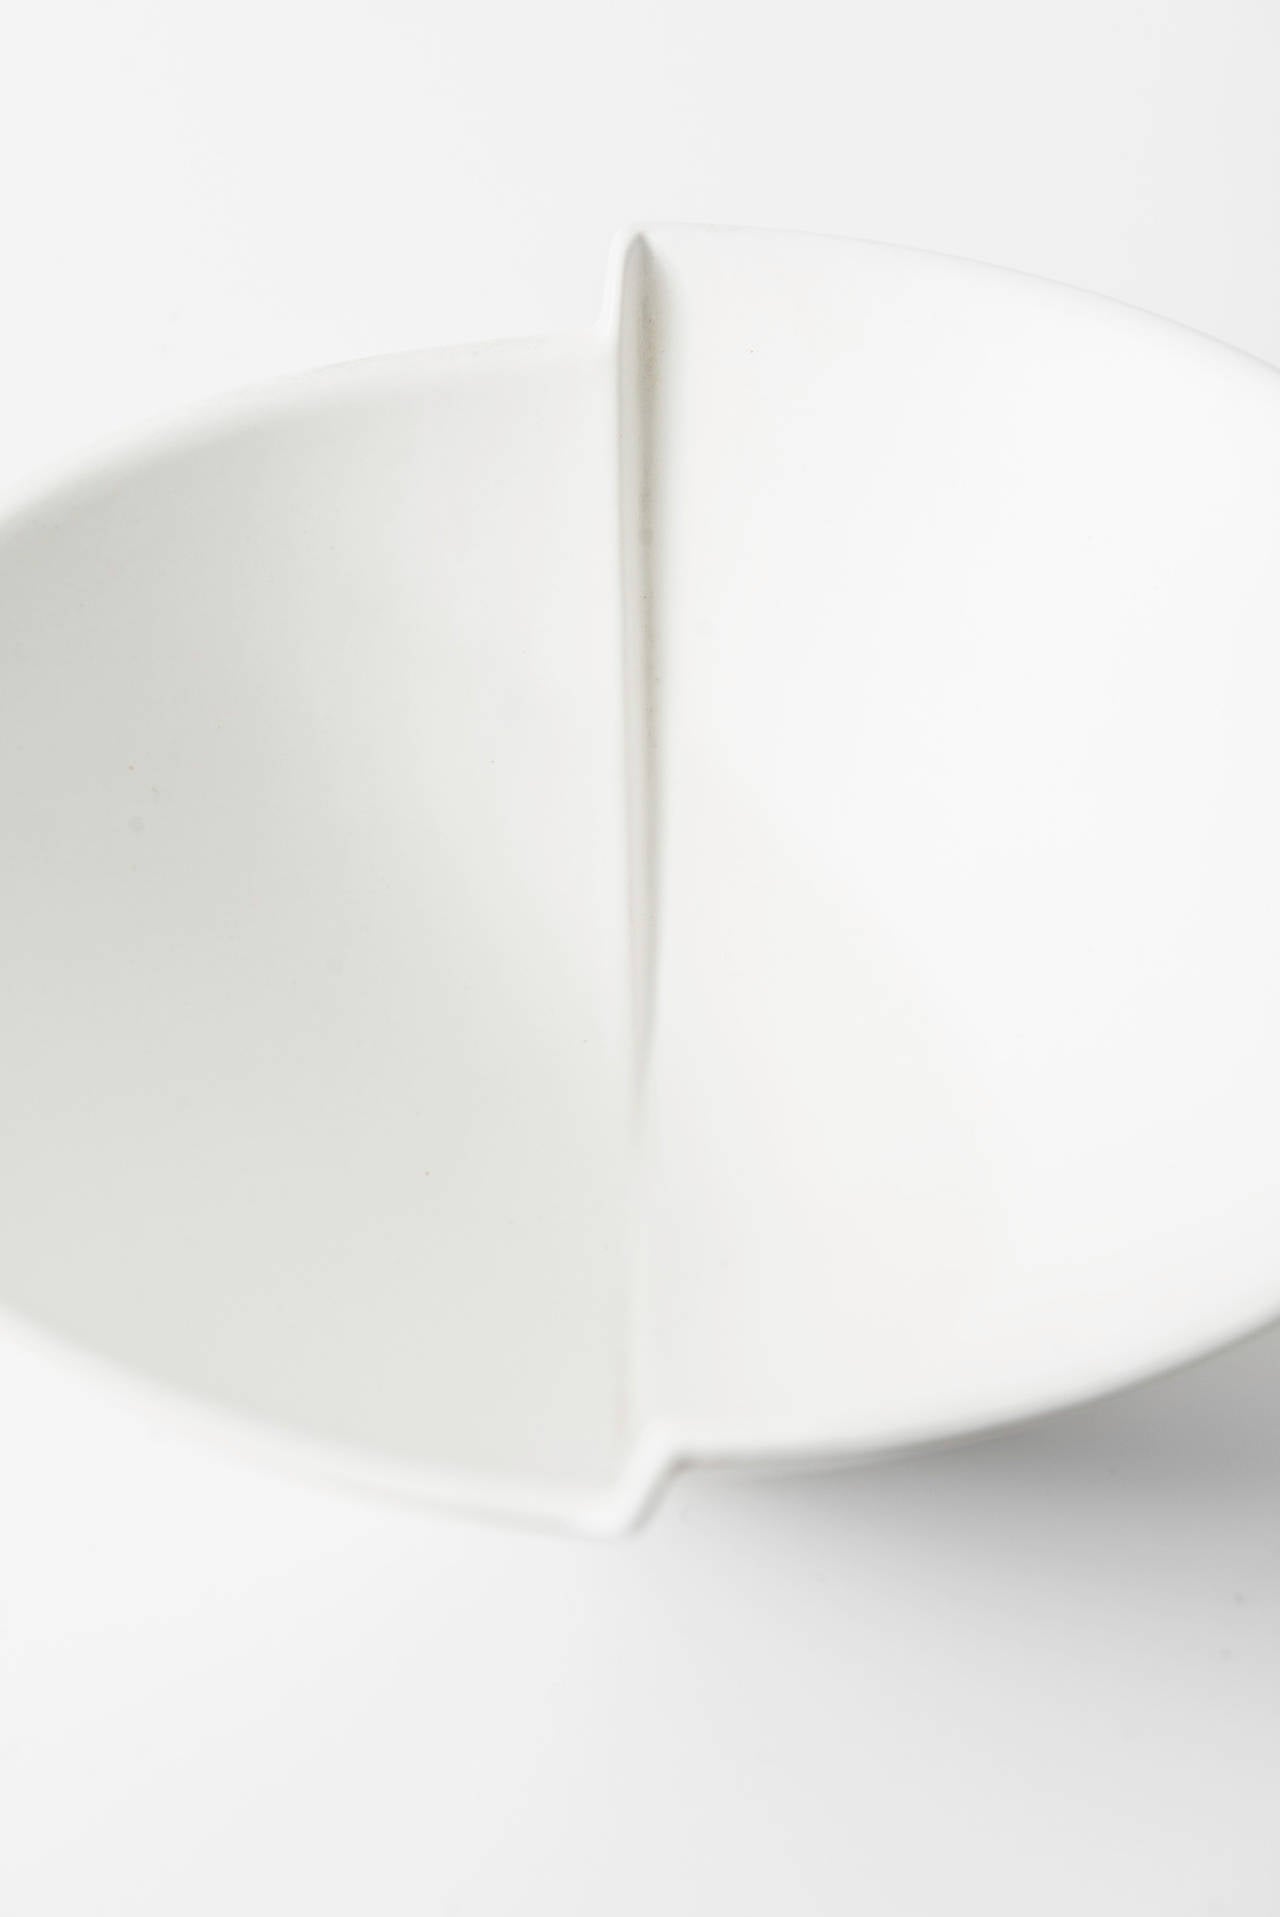 Mid-Century Modern Wilhelm Kåge Ceramic Bowl Model Surrea by Gustavsberg in Sweden For Sale